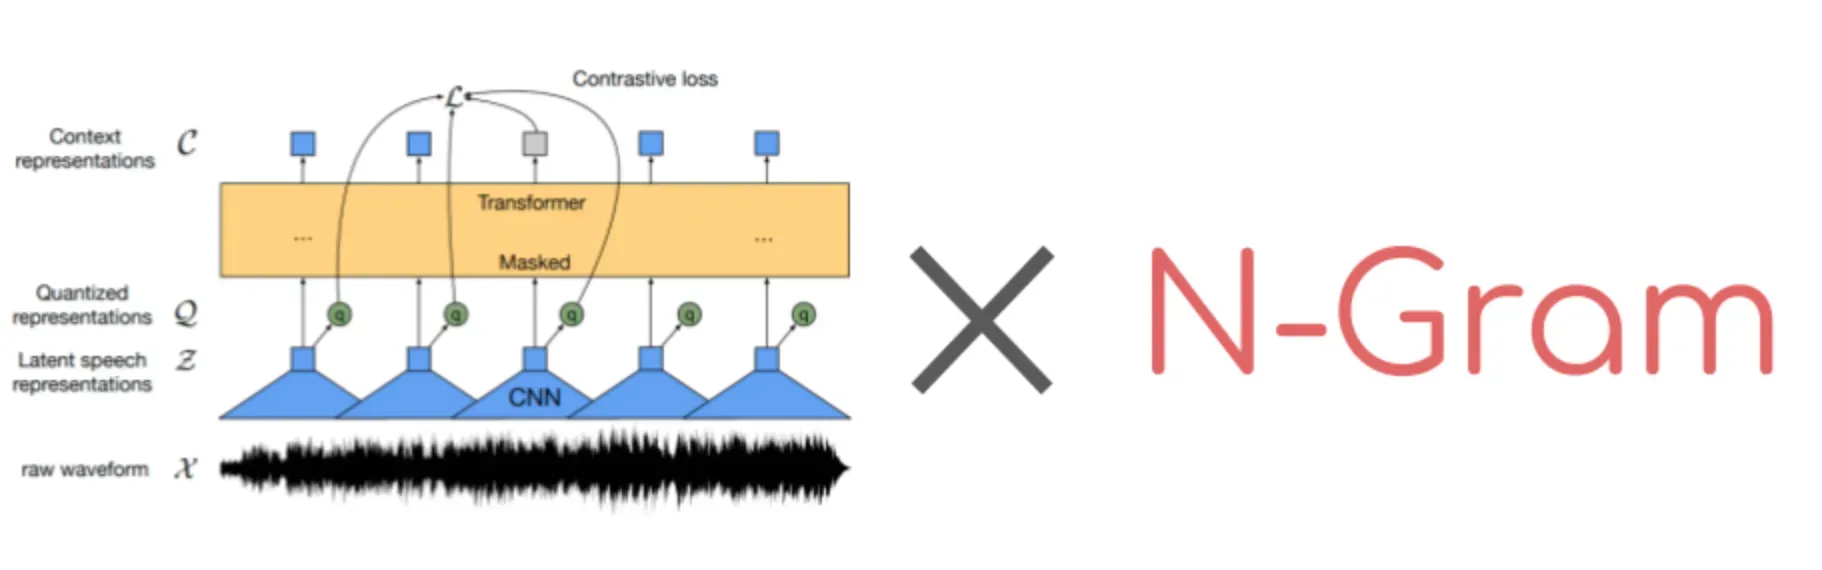 N-Gram models in Machine Translation